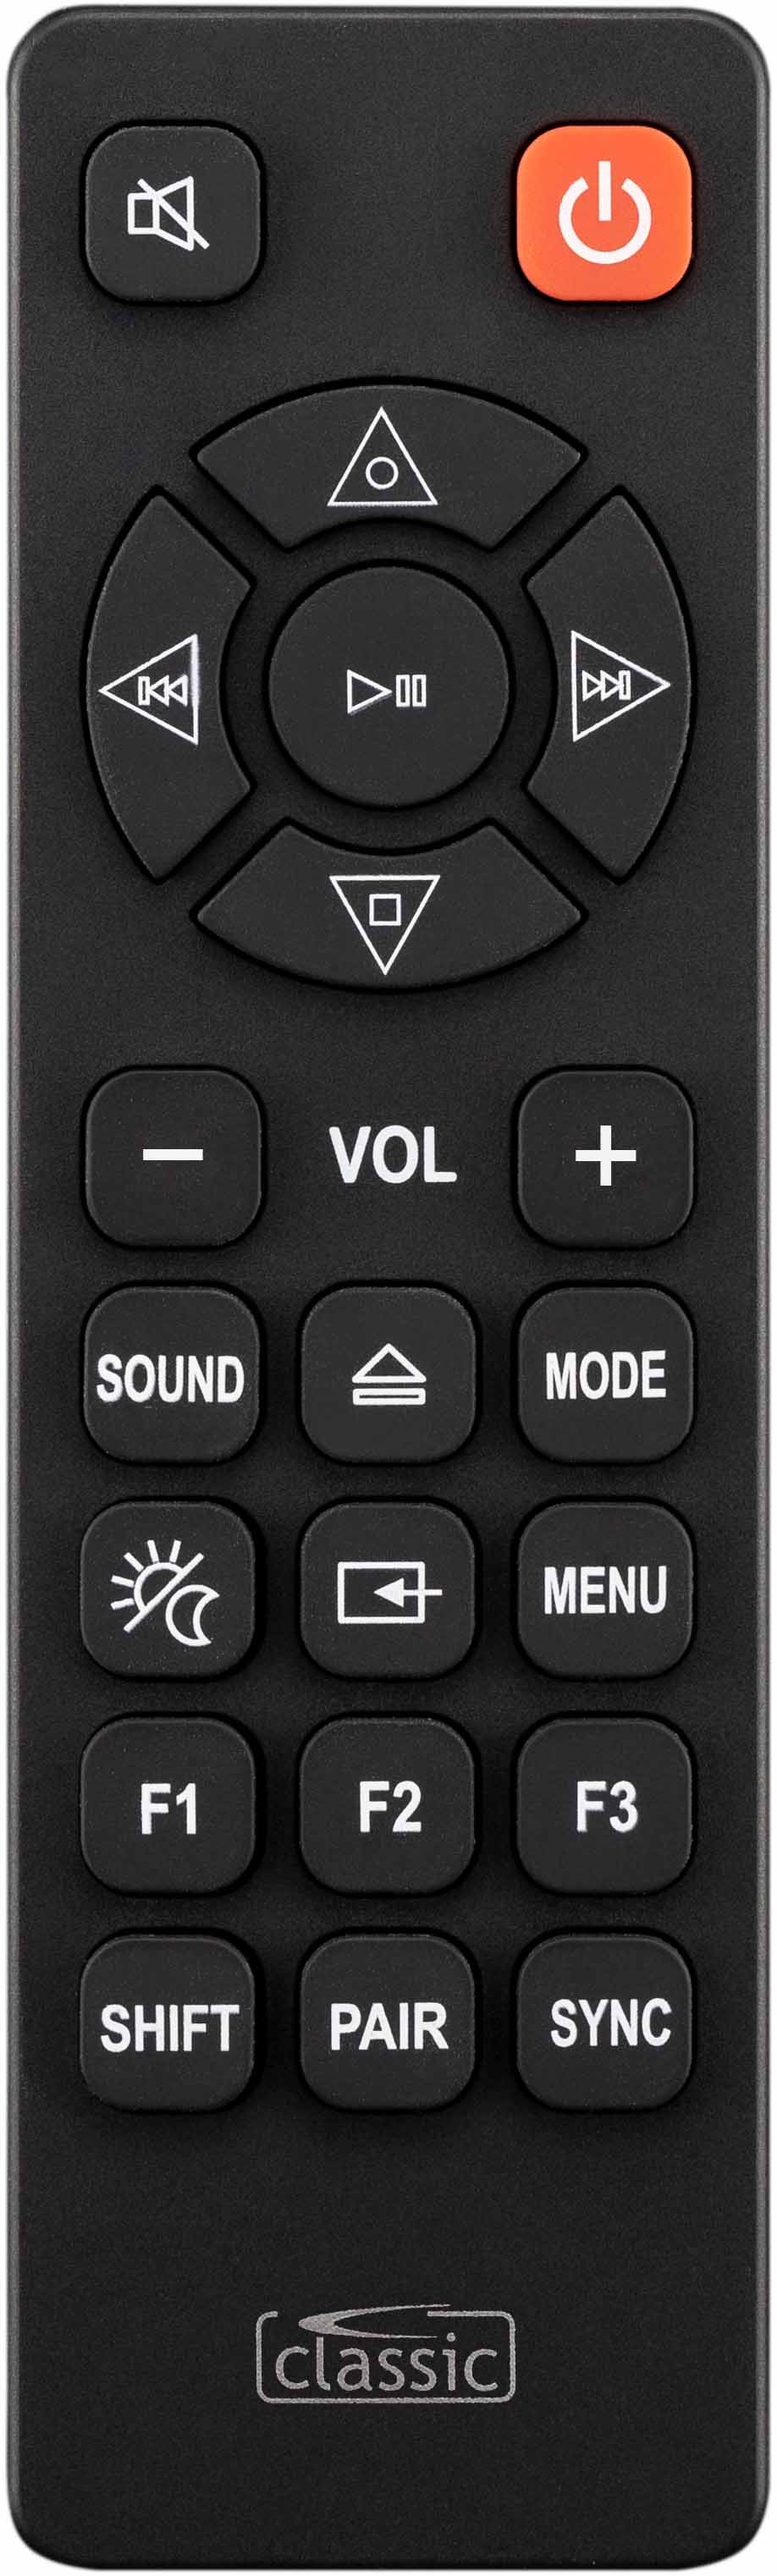 JVC RM-STHD357 Remote Control Alternative